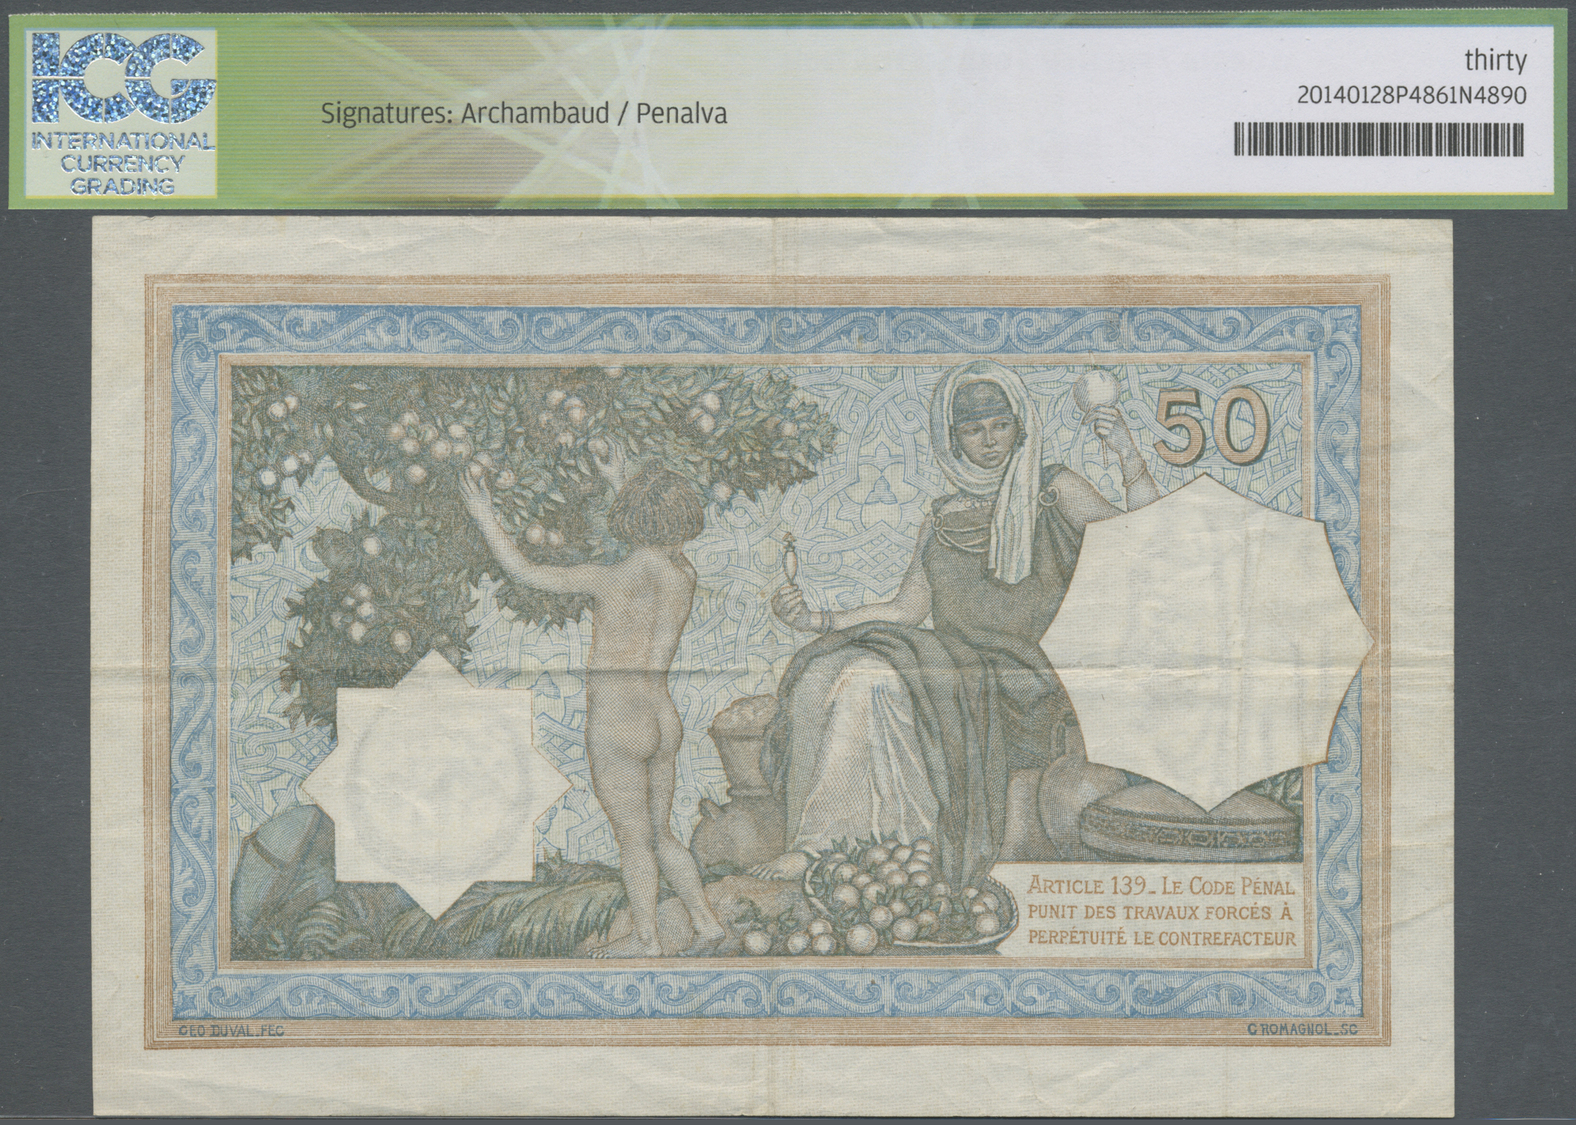 00011 Algeria / Algerien: 50 Francs 1936 P. 80a, Condition: ICG Graded 30 Very Fine. - Algérie